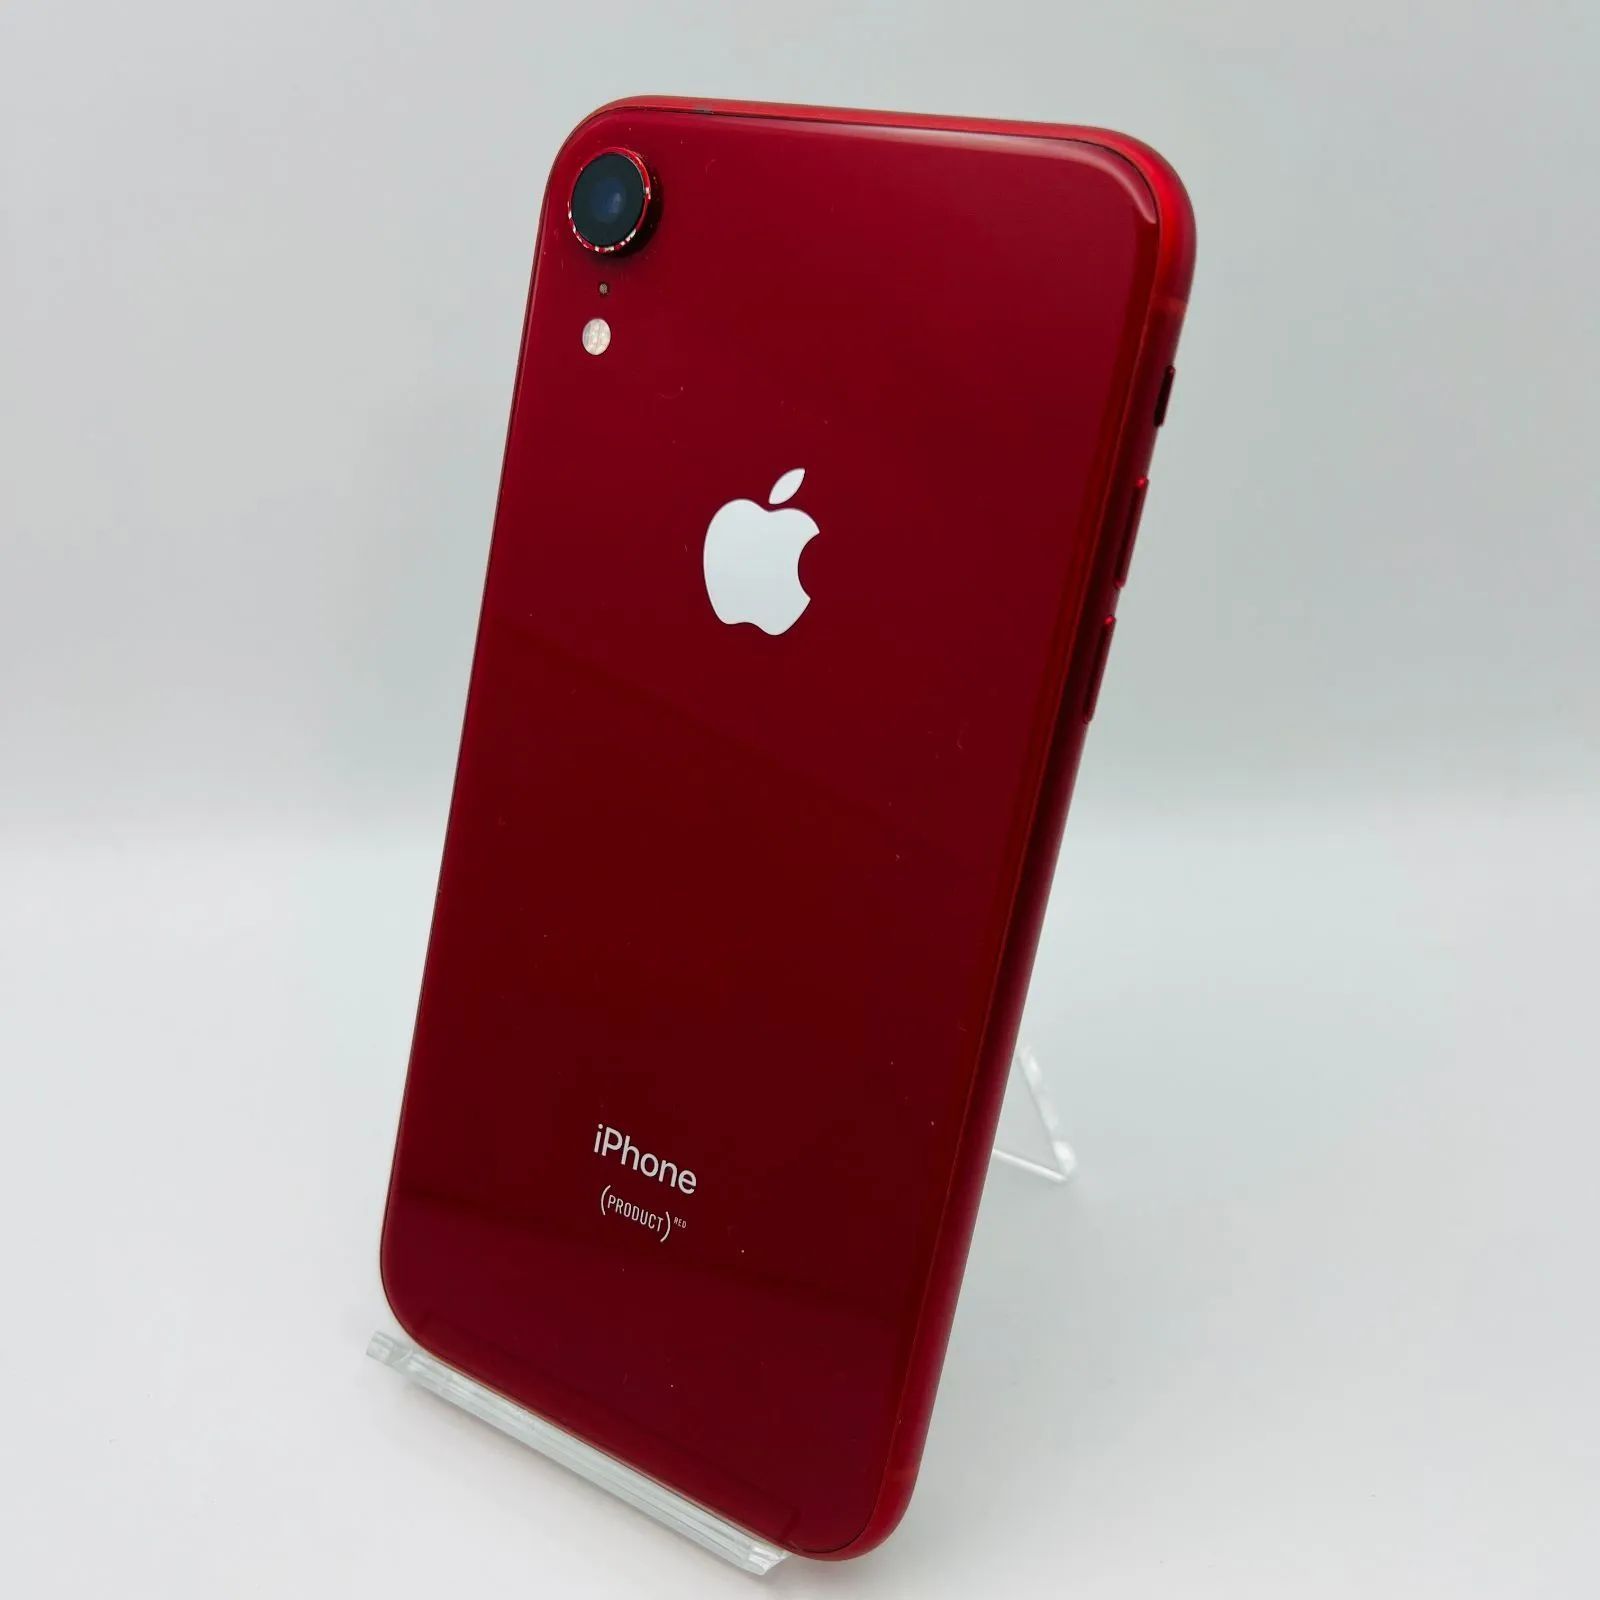 iPhoneXR RED 128GB 画面不良有り - スマートフォン本体